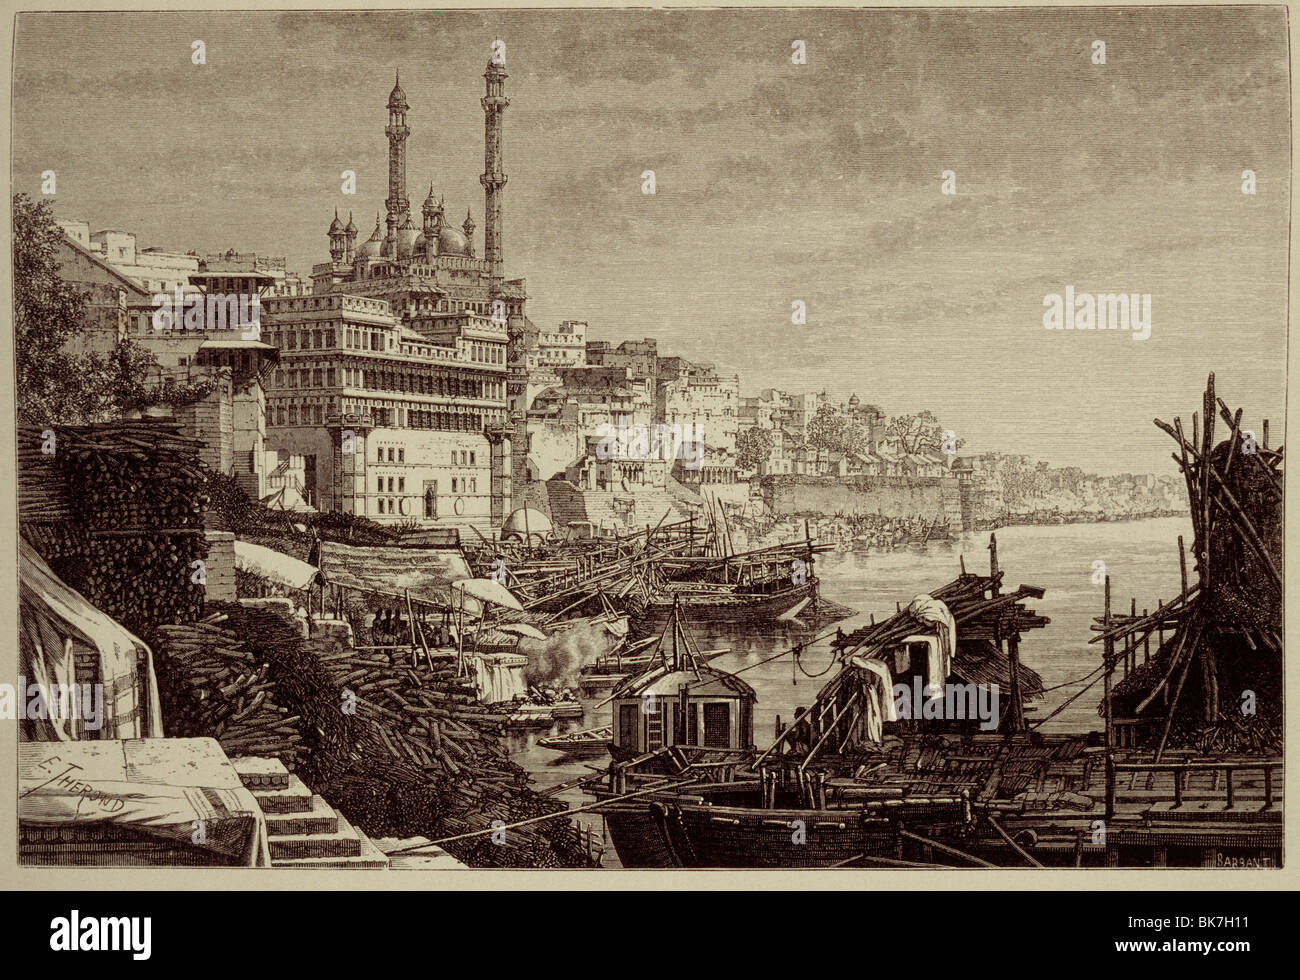 Une gravure du xixe siècle de Varanasi (Bénarès), de l'Uttar Pradesh, Inde, Asie Banque D'Images